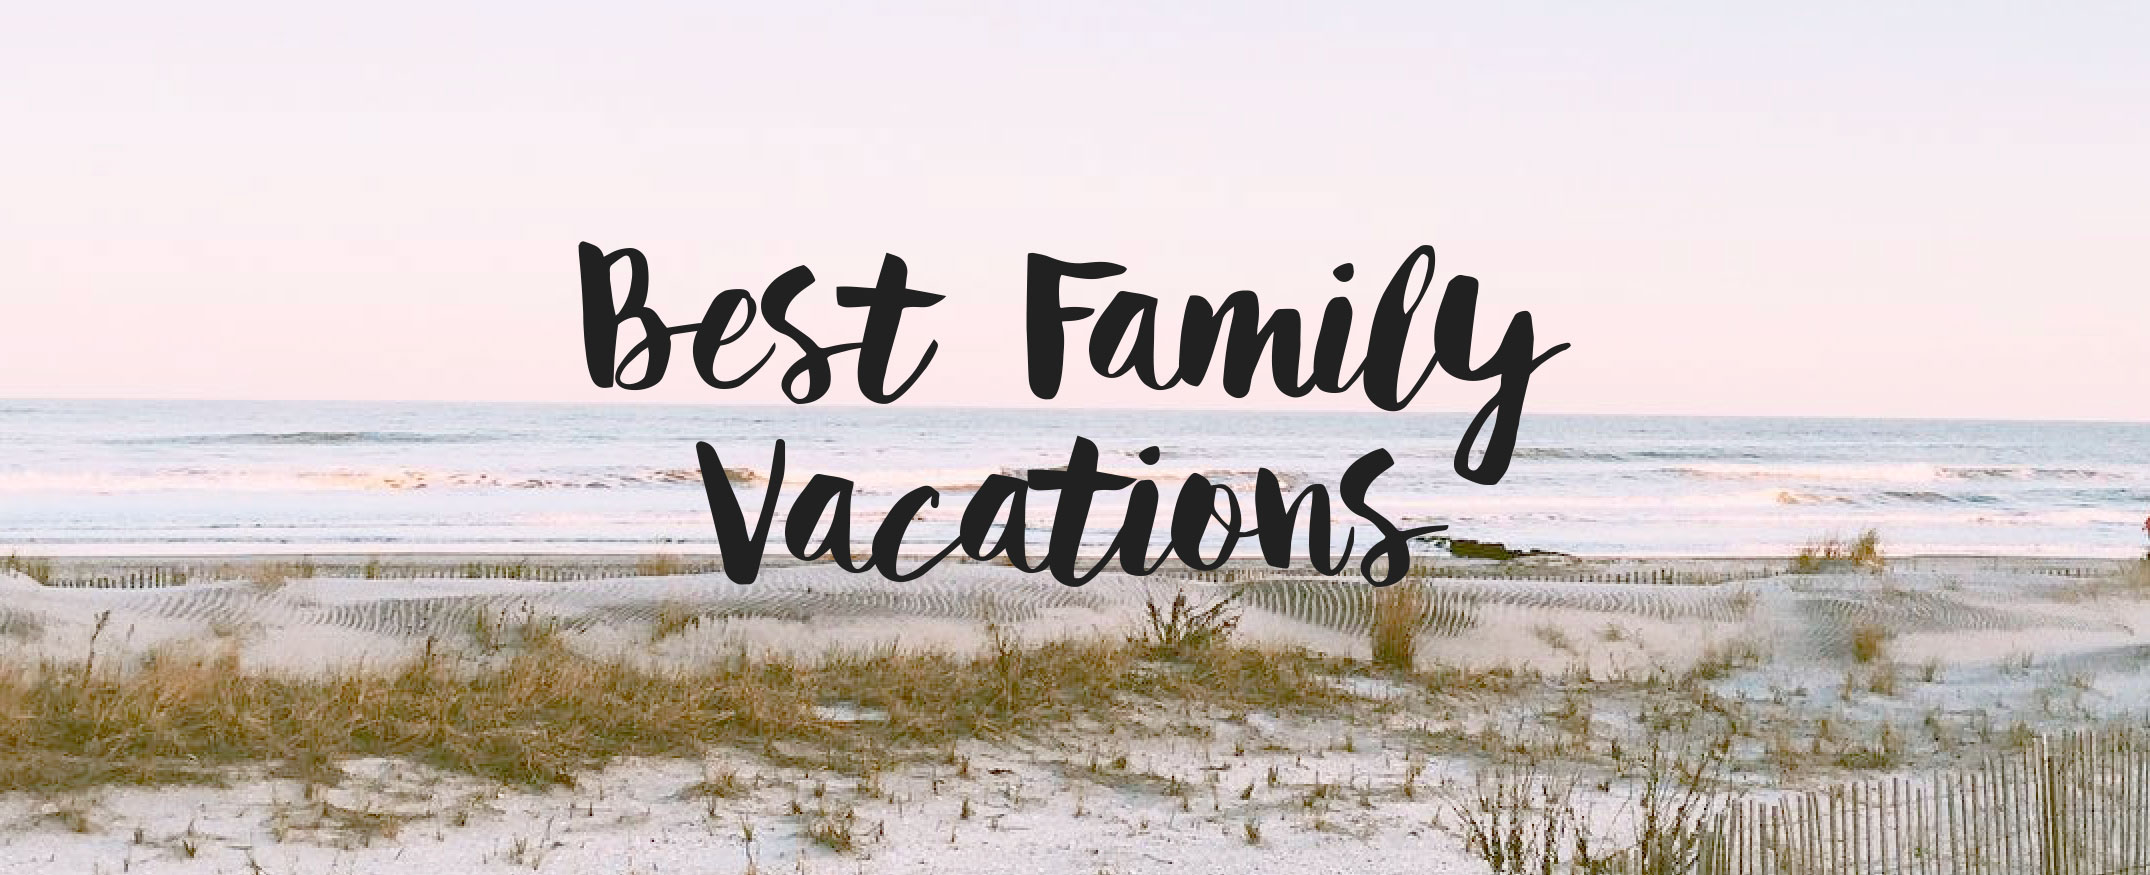 best-family-vacations-oceancitynj-america-small.jpg